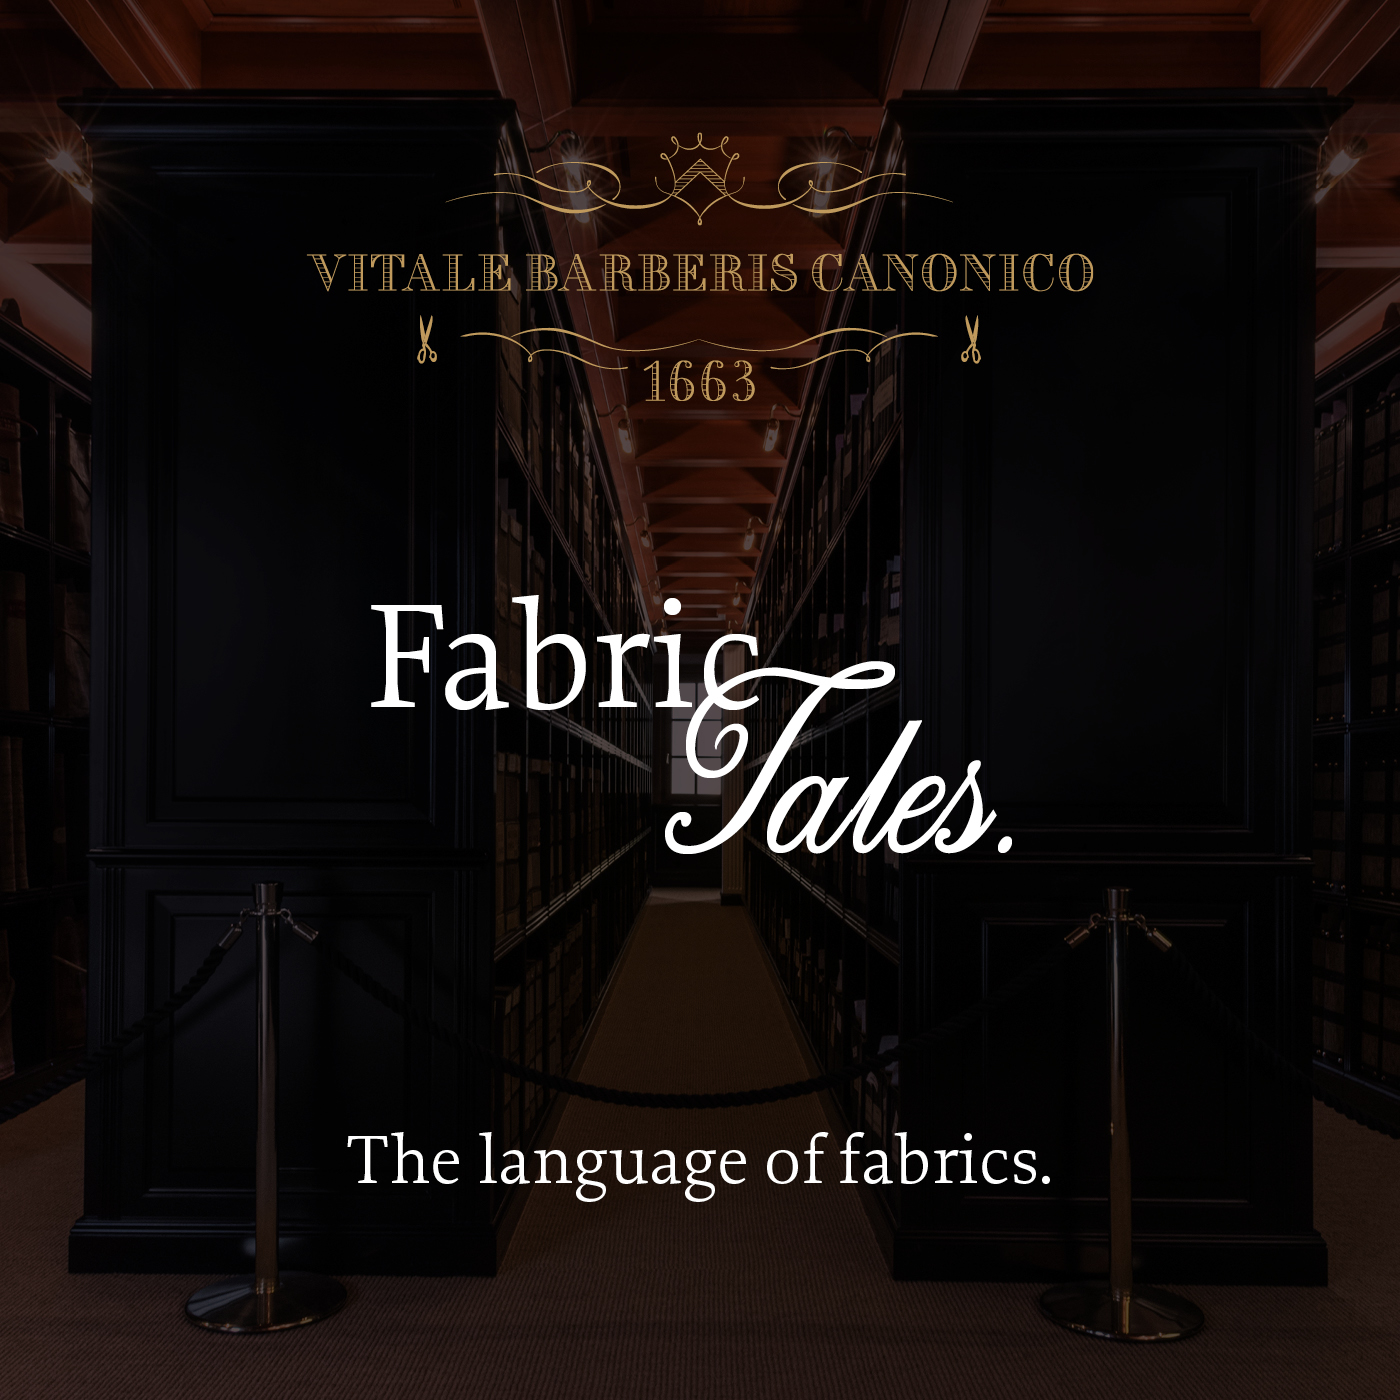 The language of fabrics